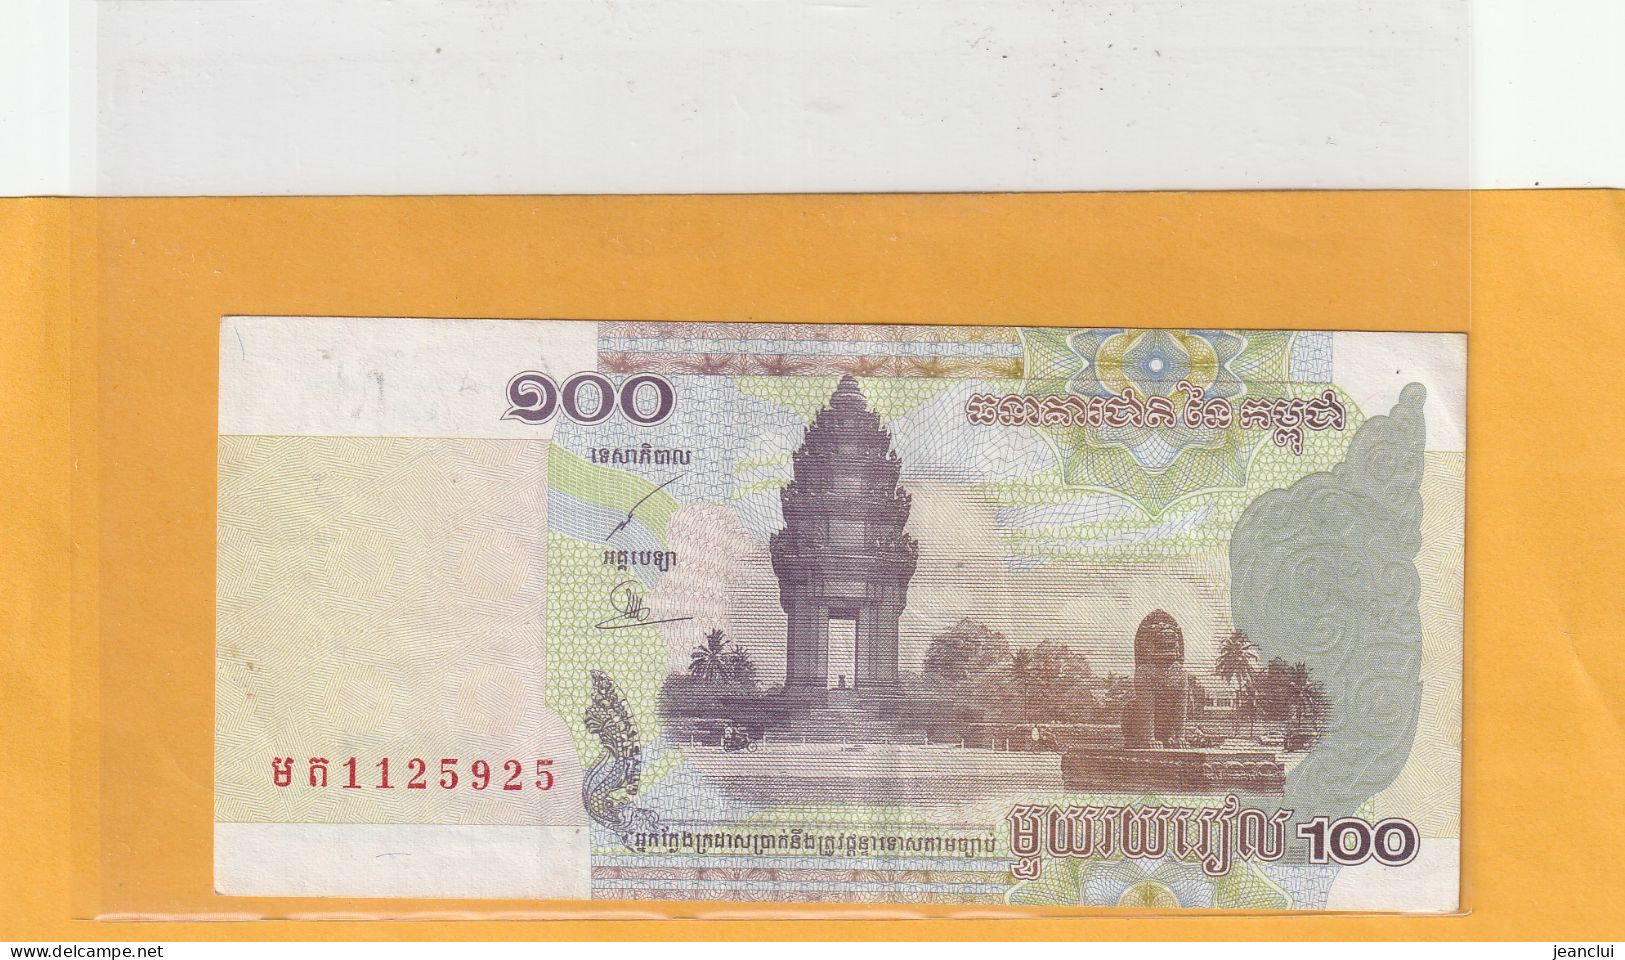 BANQUE NATIONALE DU CAMBODGE  .  100 RIELS  . 2001  . N°  1125925  .  BILLET ETAT LUXE  .  2 SCANNES - Cambogia